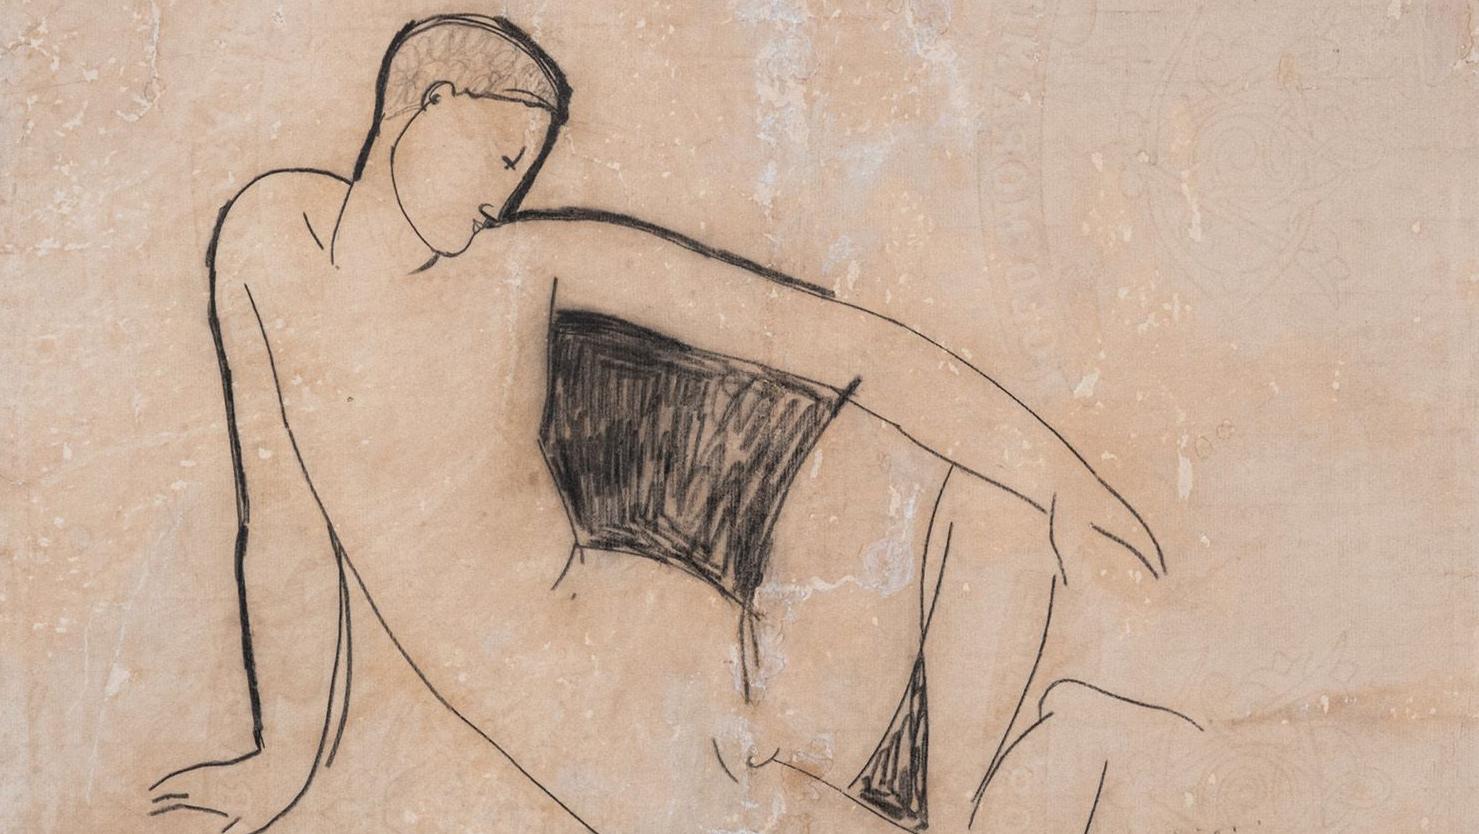   Un nu sinueux d'Amedeo Modigliani